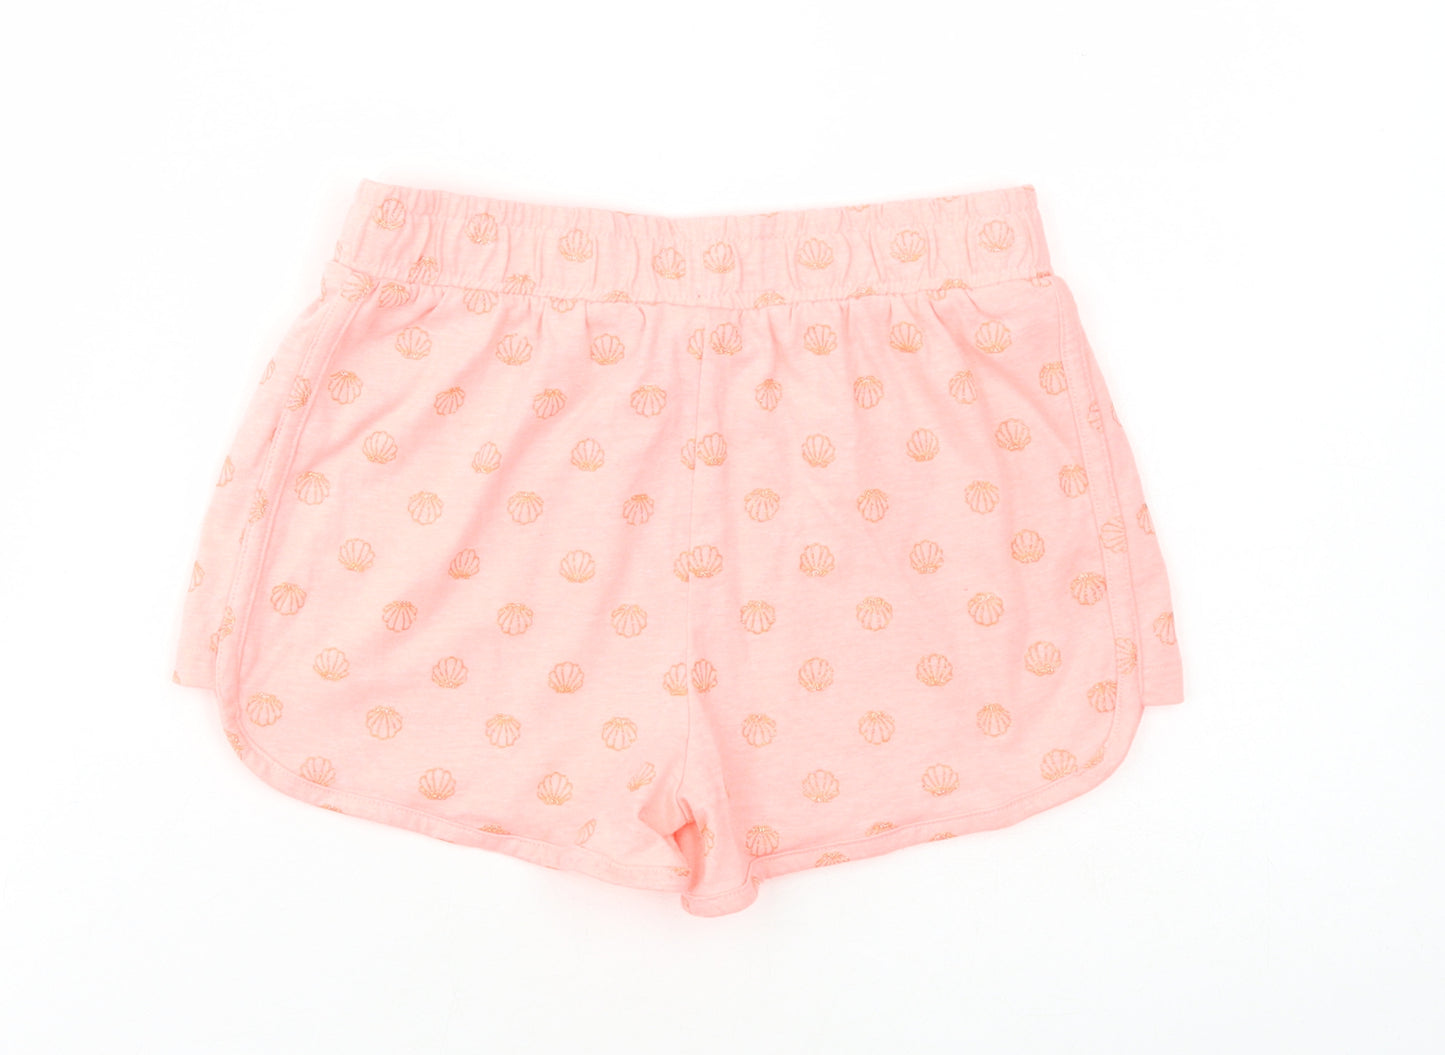 Dunnes Stores Girls Pink Geometric Cotton Sweat Shorts Size 9-10 Years Regular Drawstring - Shells